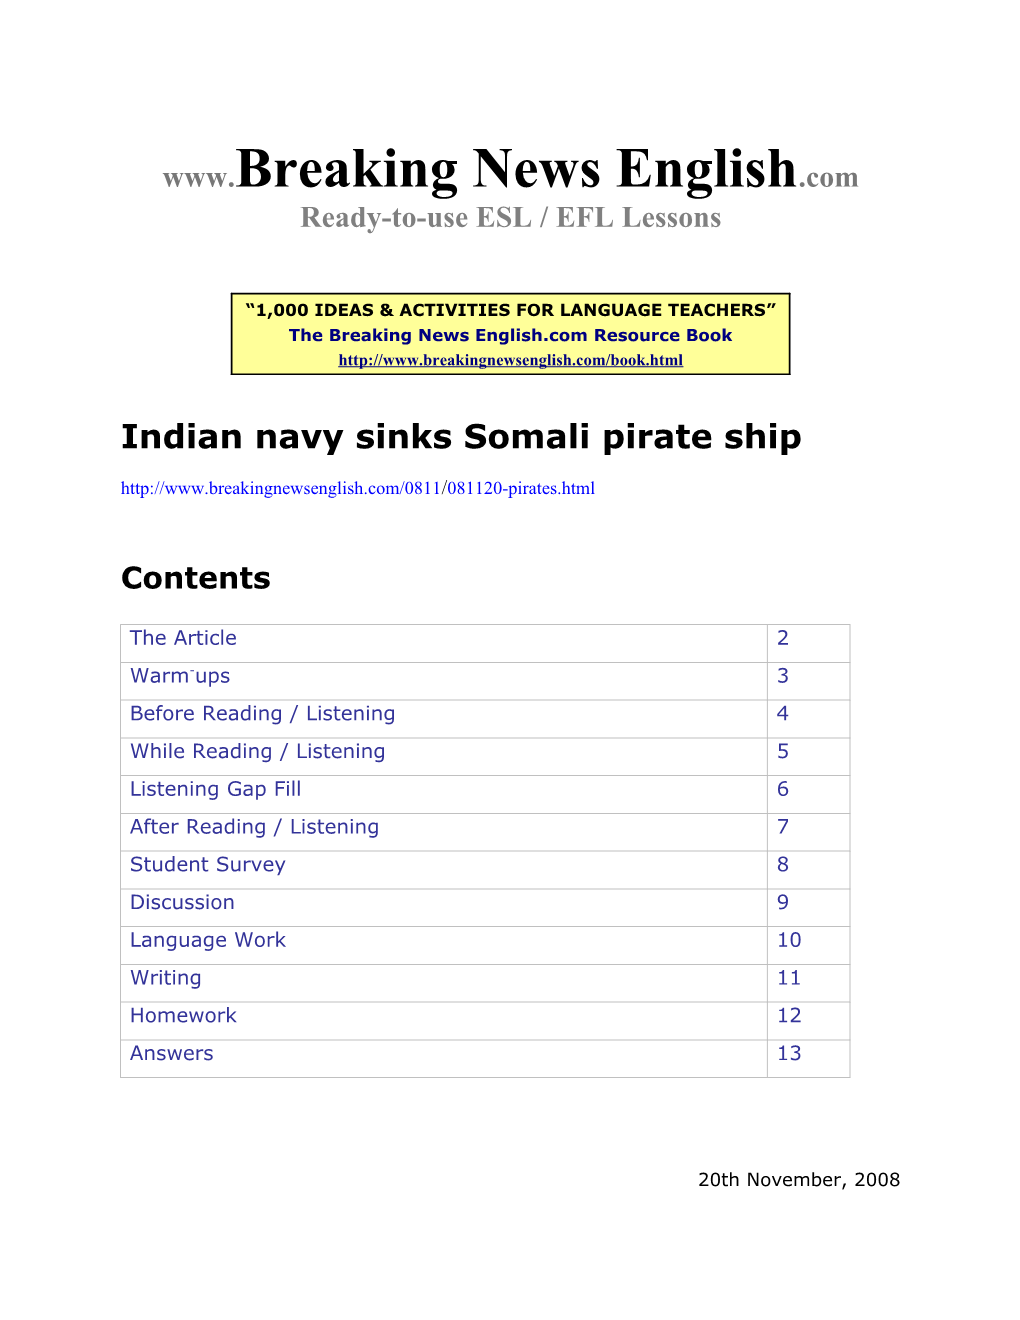 ESL Lesson: Indian Navy Sinks Somali Pirate Ship